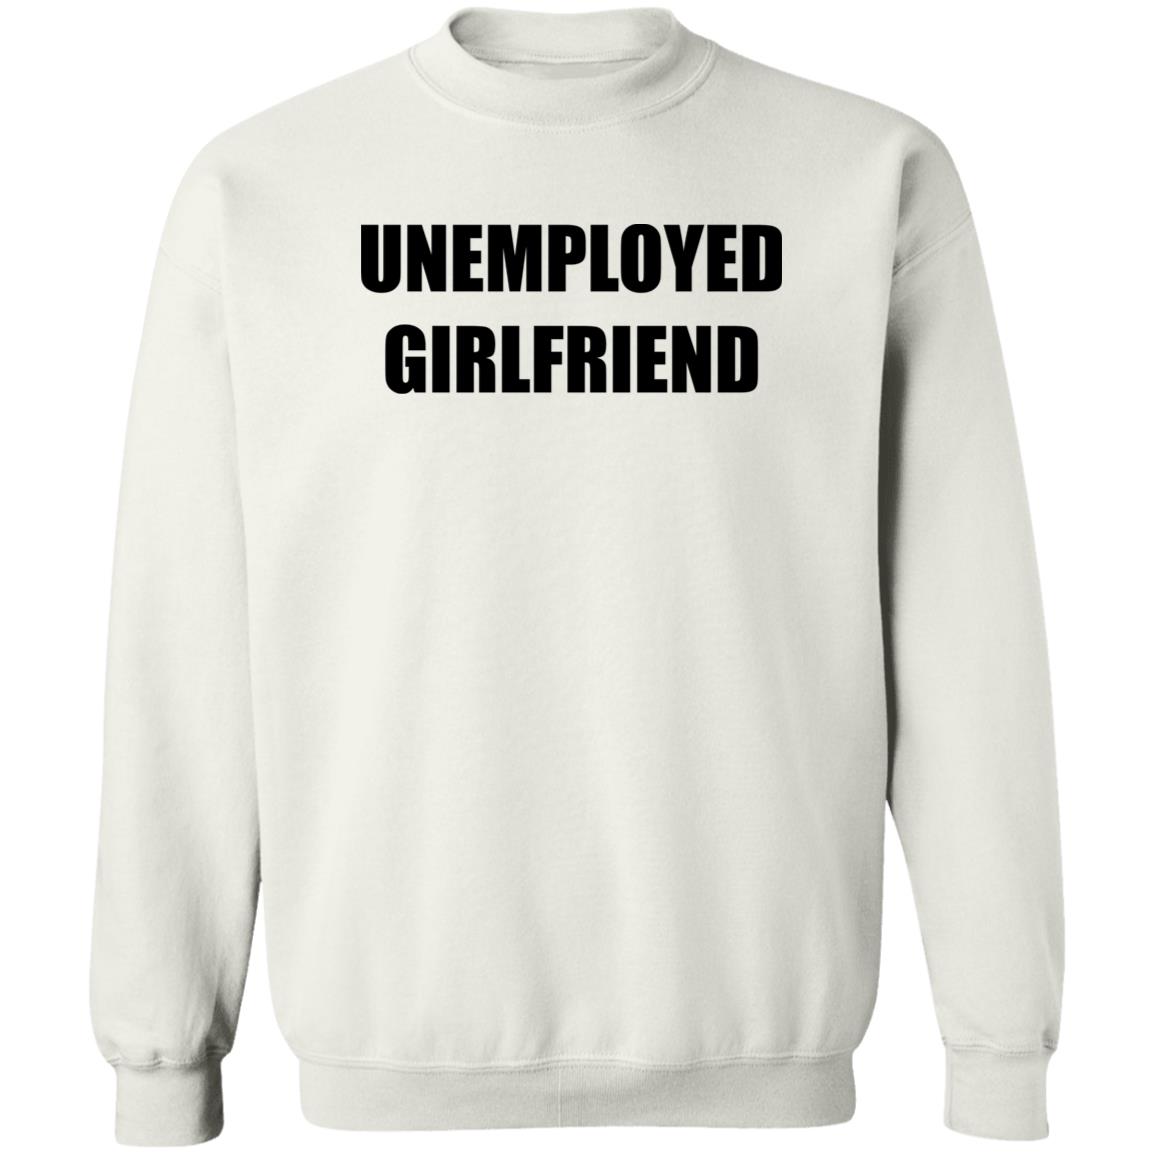 Unemployed Girlfriend Shirt 1